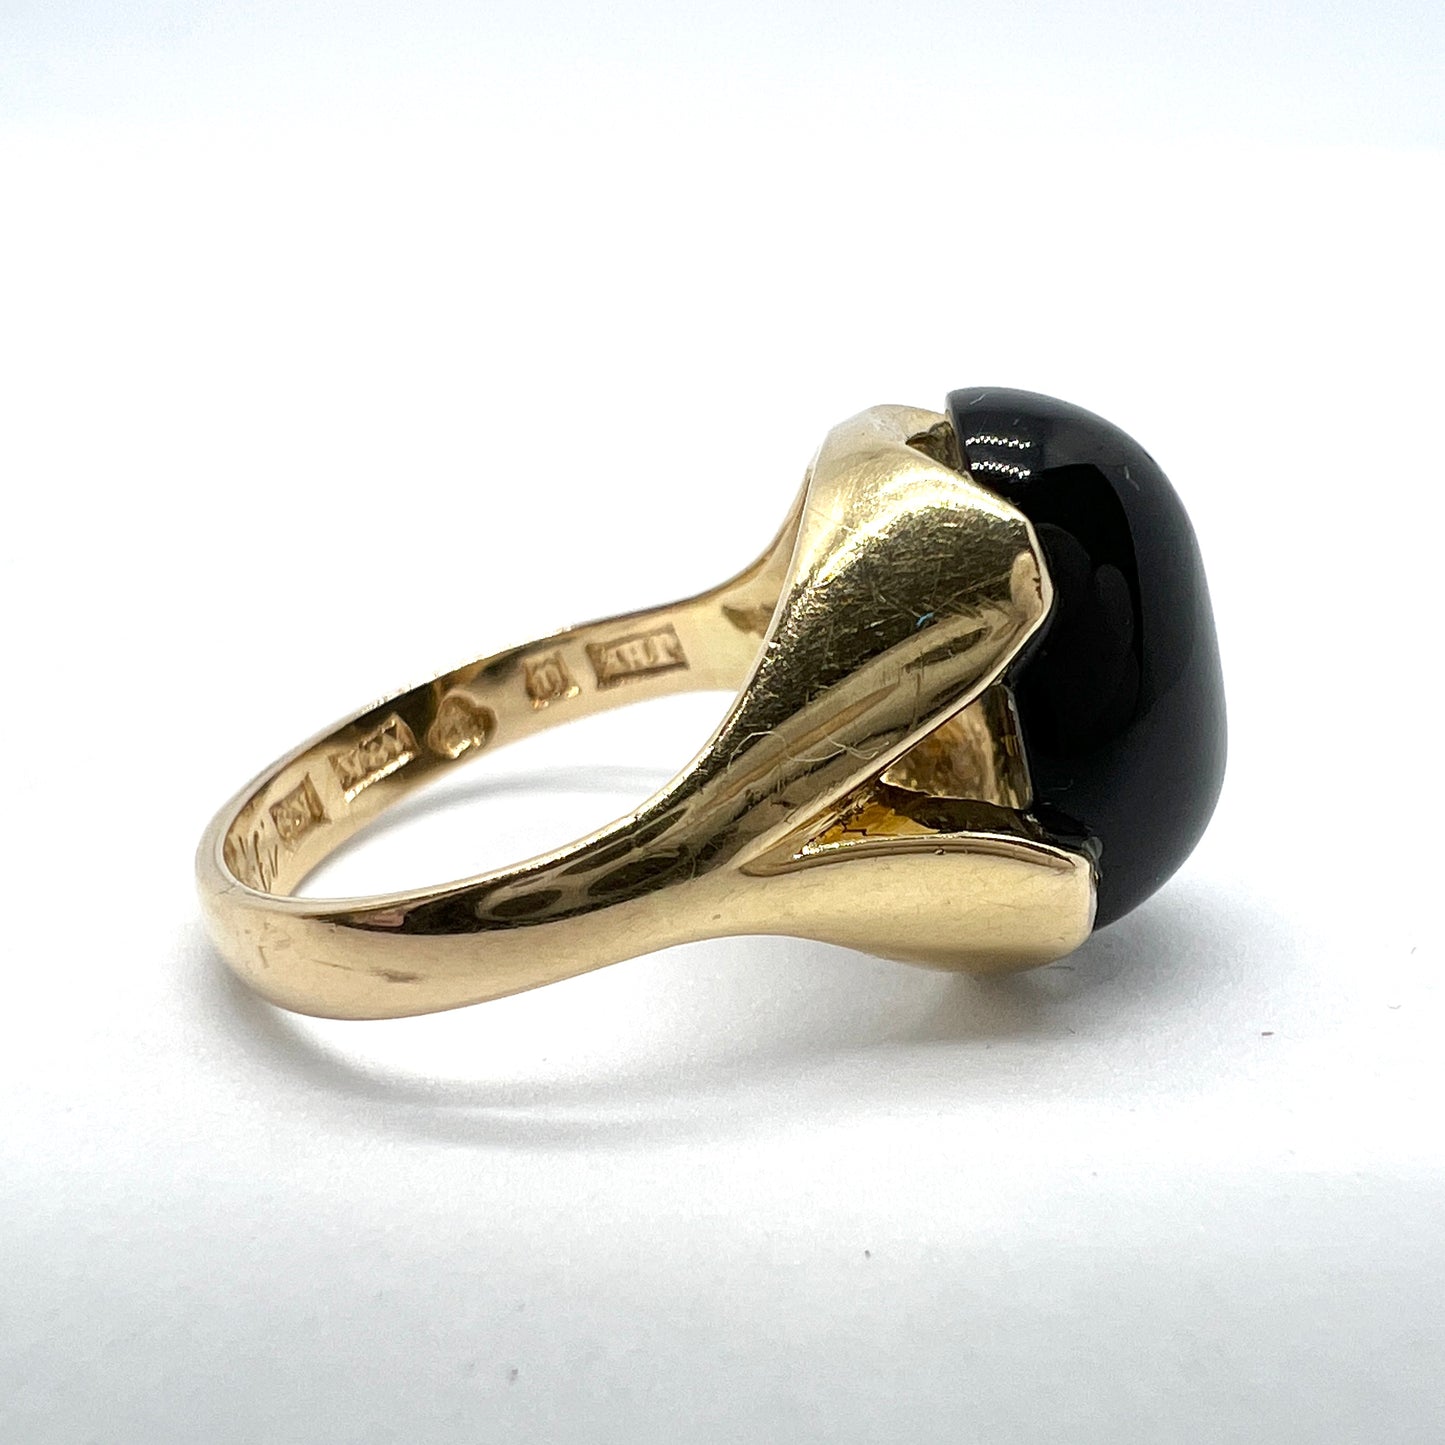 John Hoffner, Sweden year 1960. Vintage 18k Gold Onyx Ring.